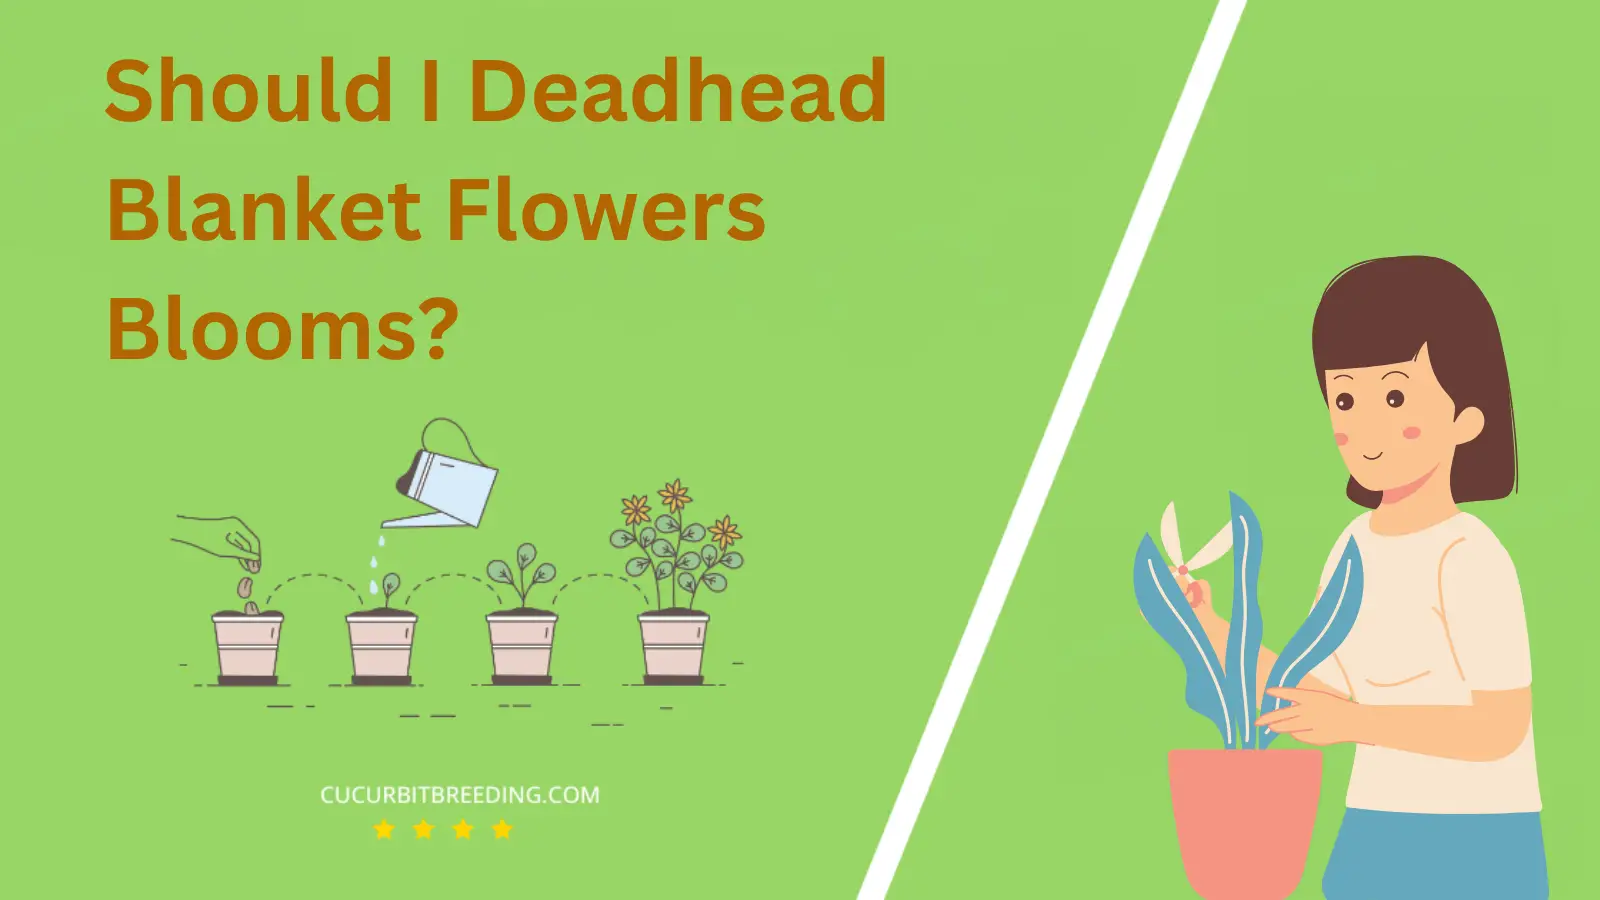 Should I Deadhead Blanket Flowers Blooms?